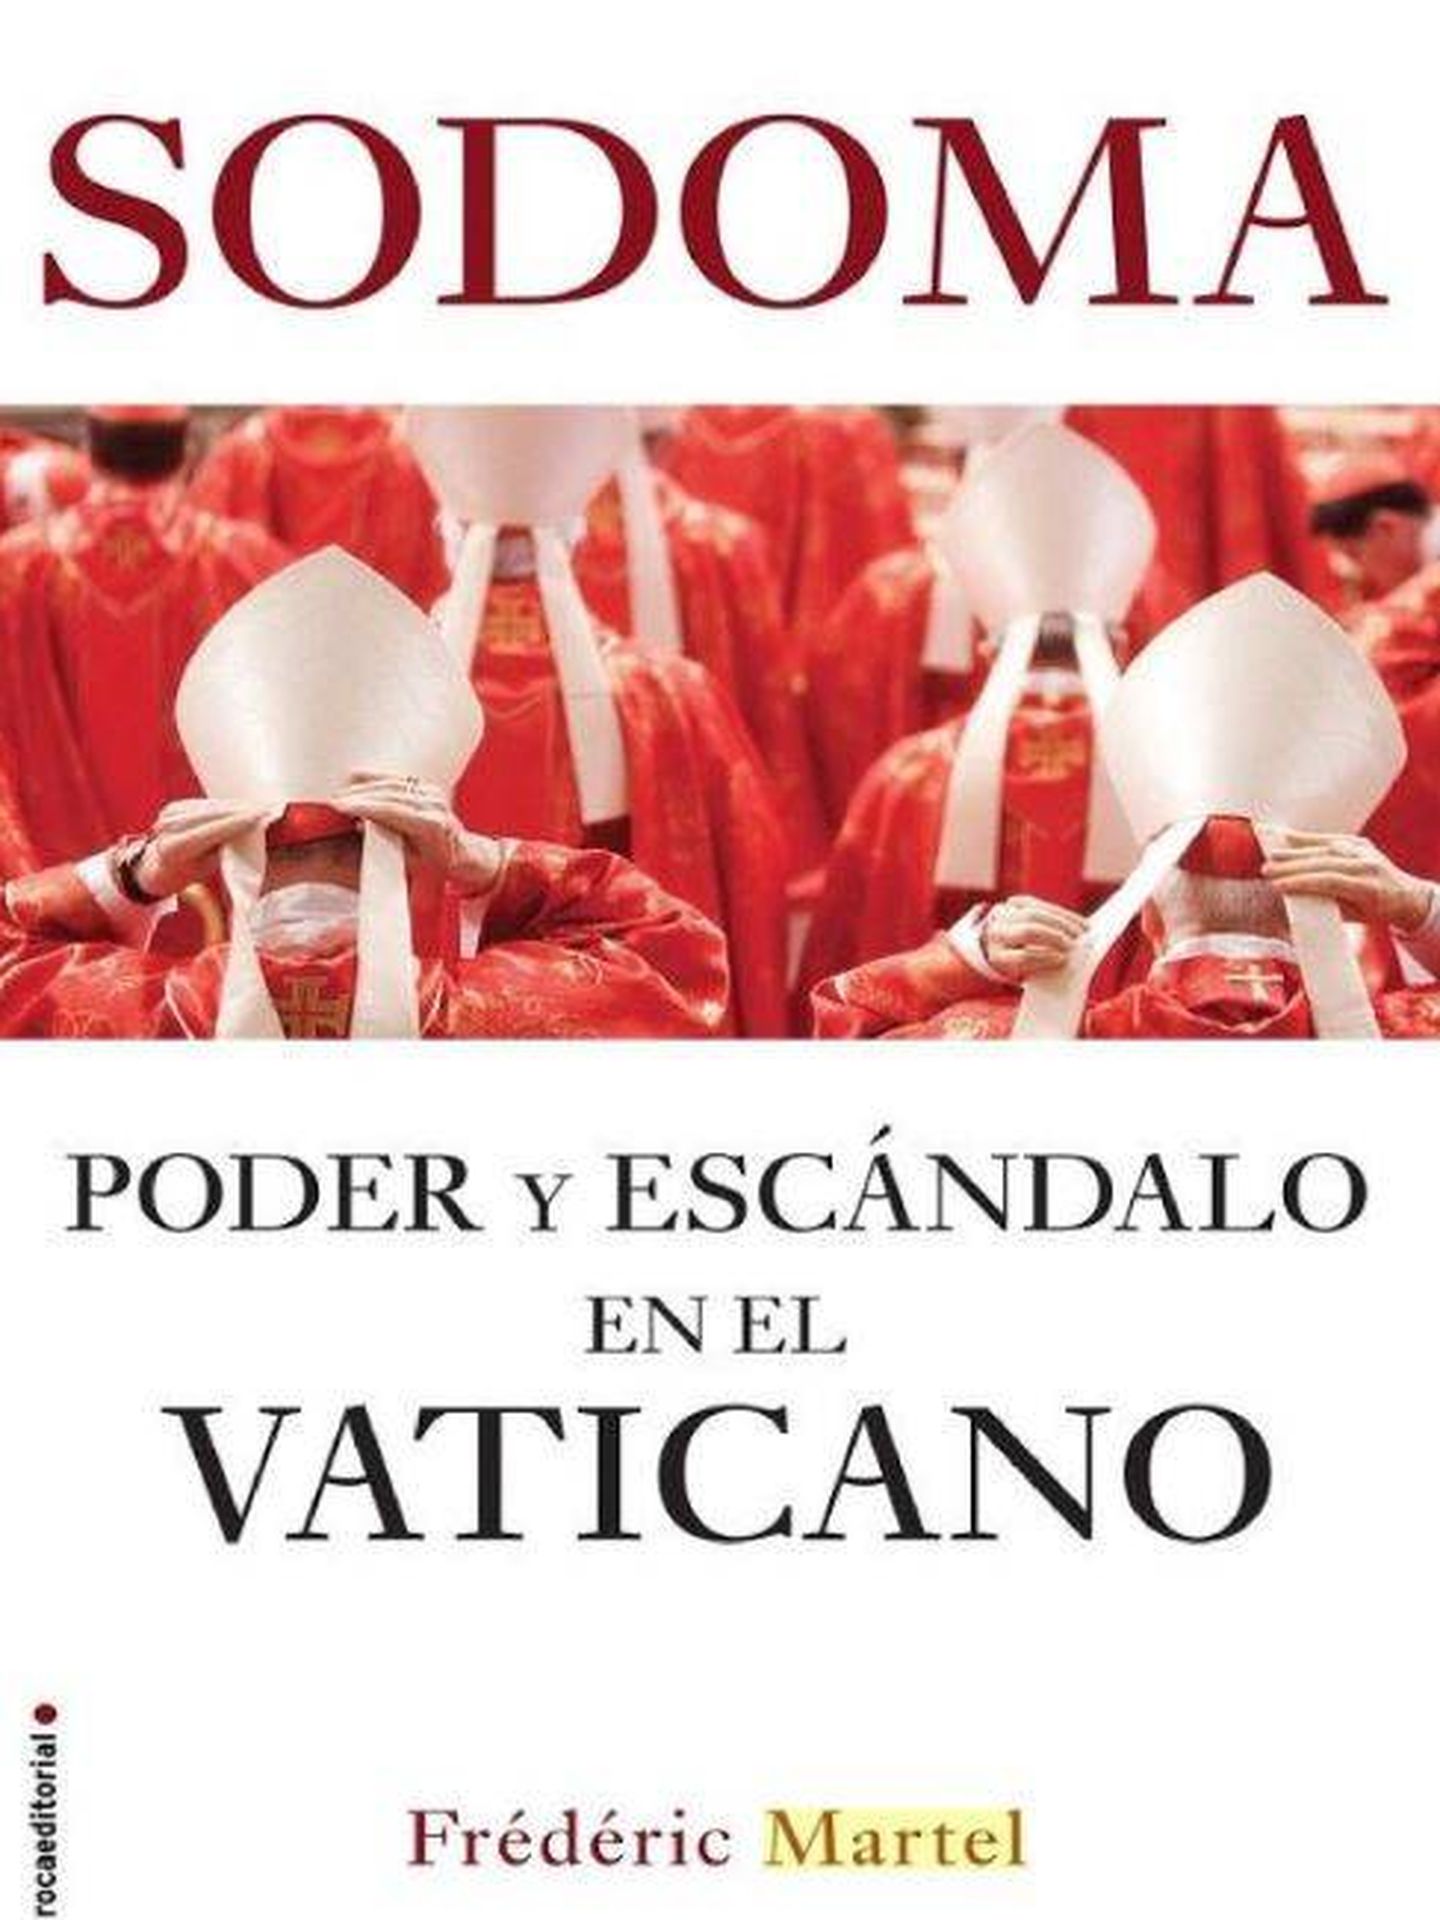 Portada de la edición latina de Sodoma. 